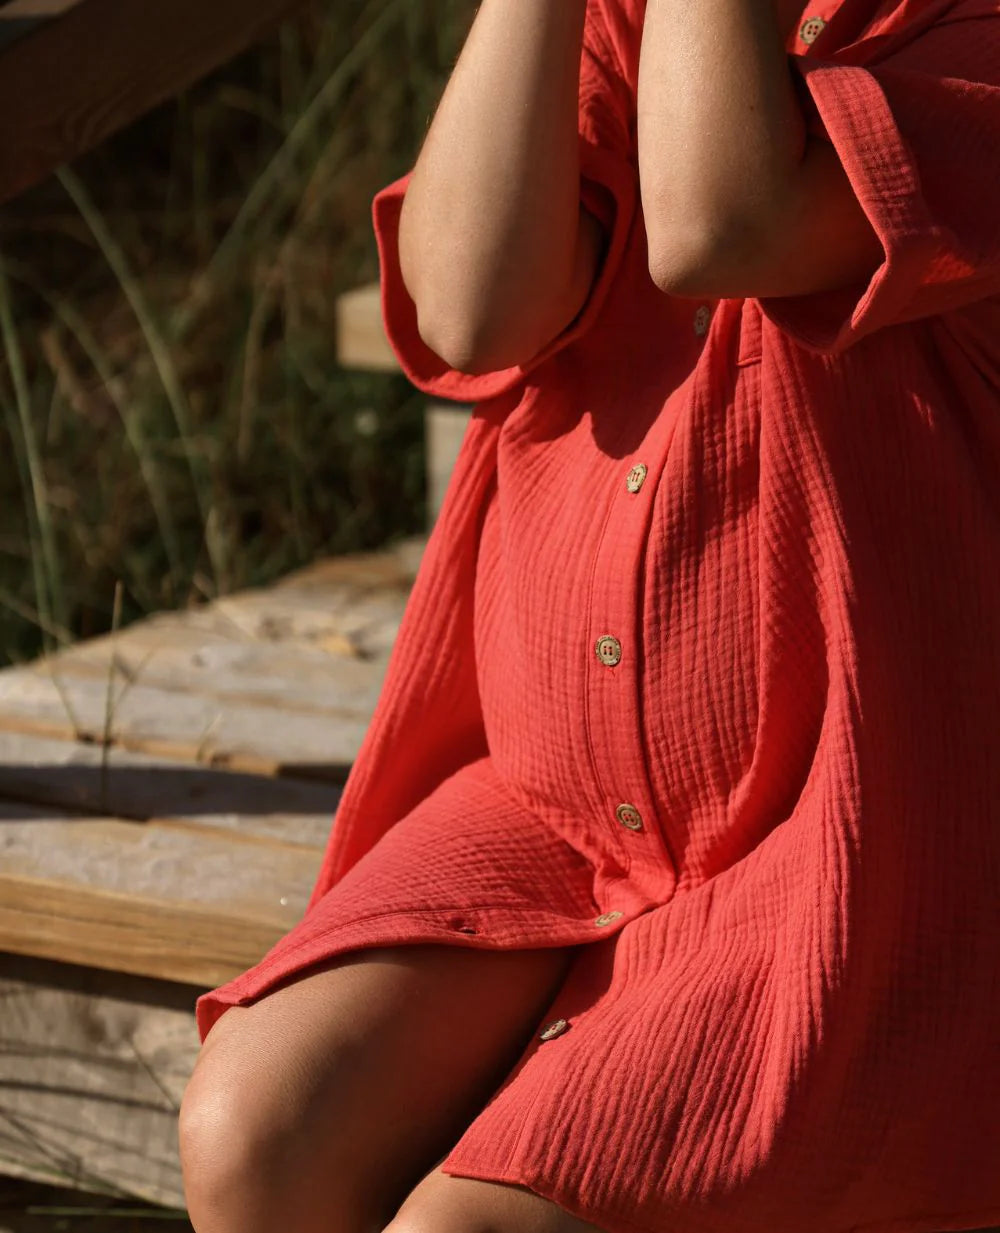 Bertille coral maternity and nursing shirt dress